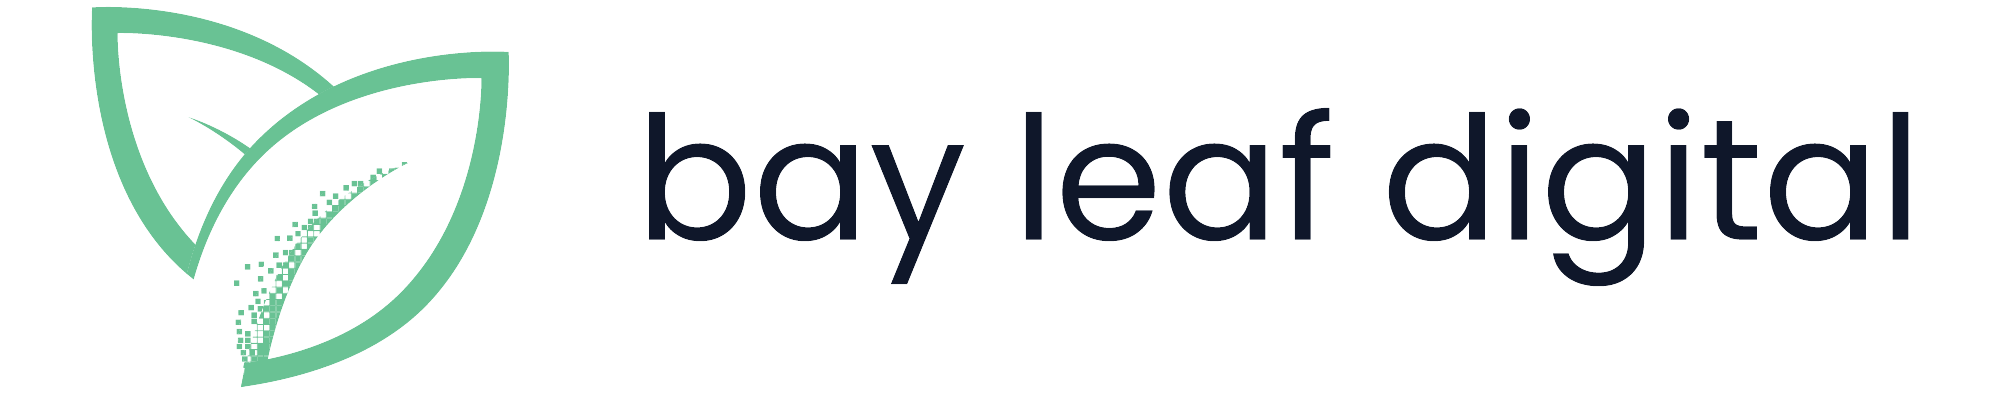 bay leaf digital logo horizontal green navy